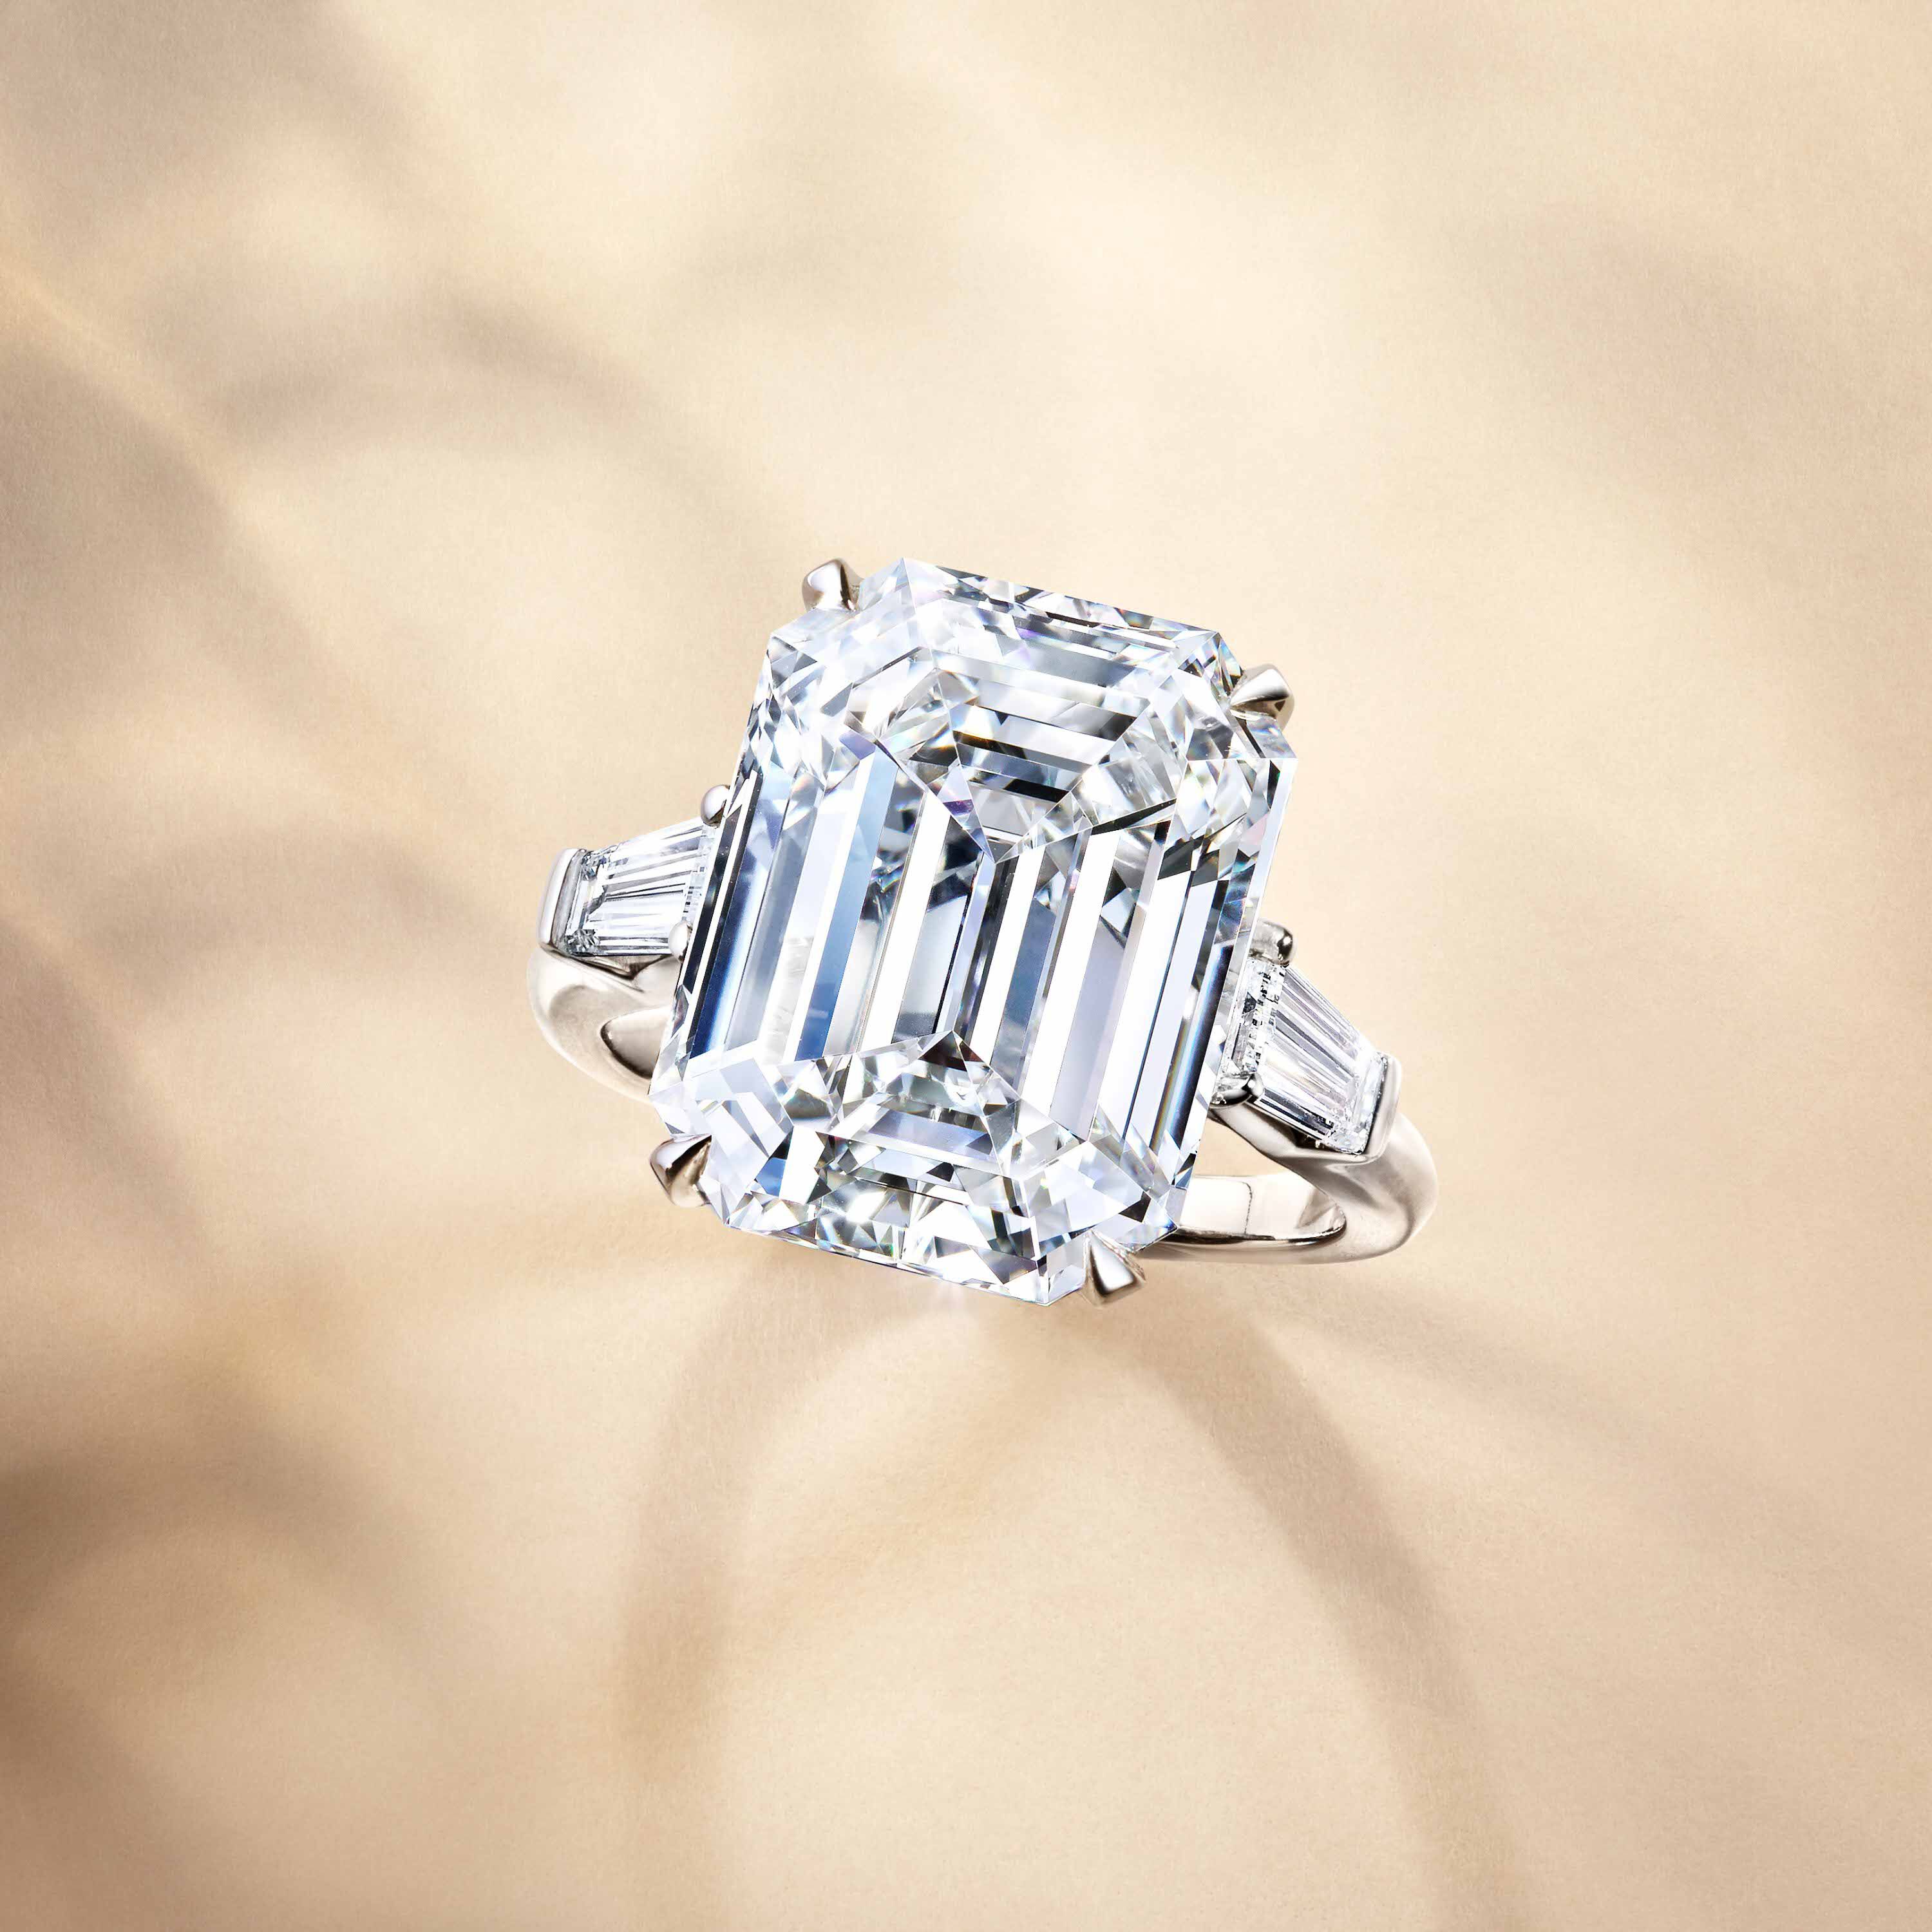 A high jewellery diamond ring by Graff